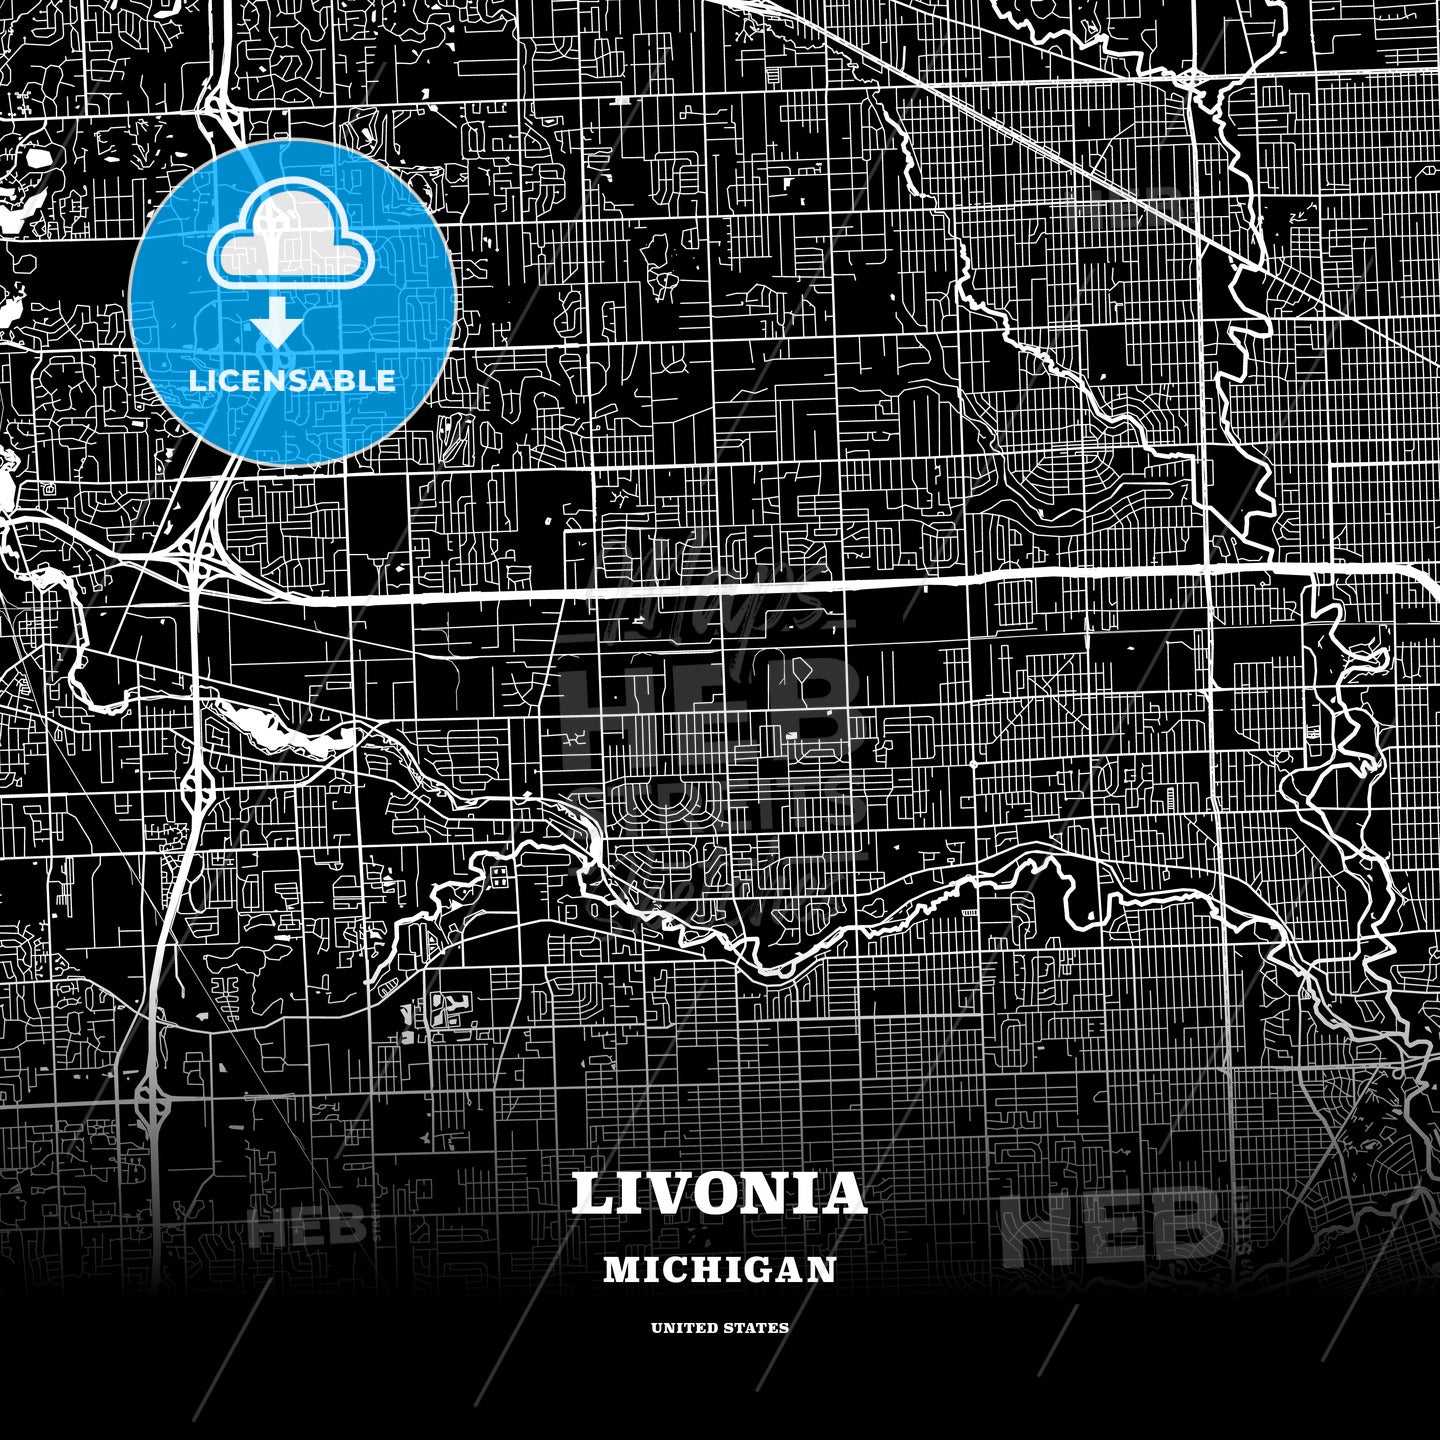 Livonia, Michigan, USA map